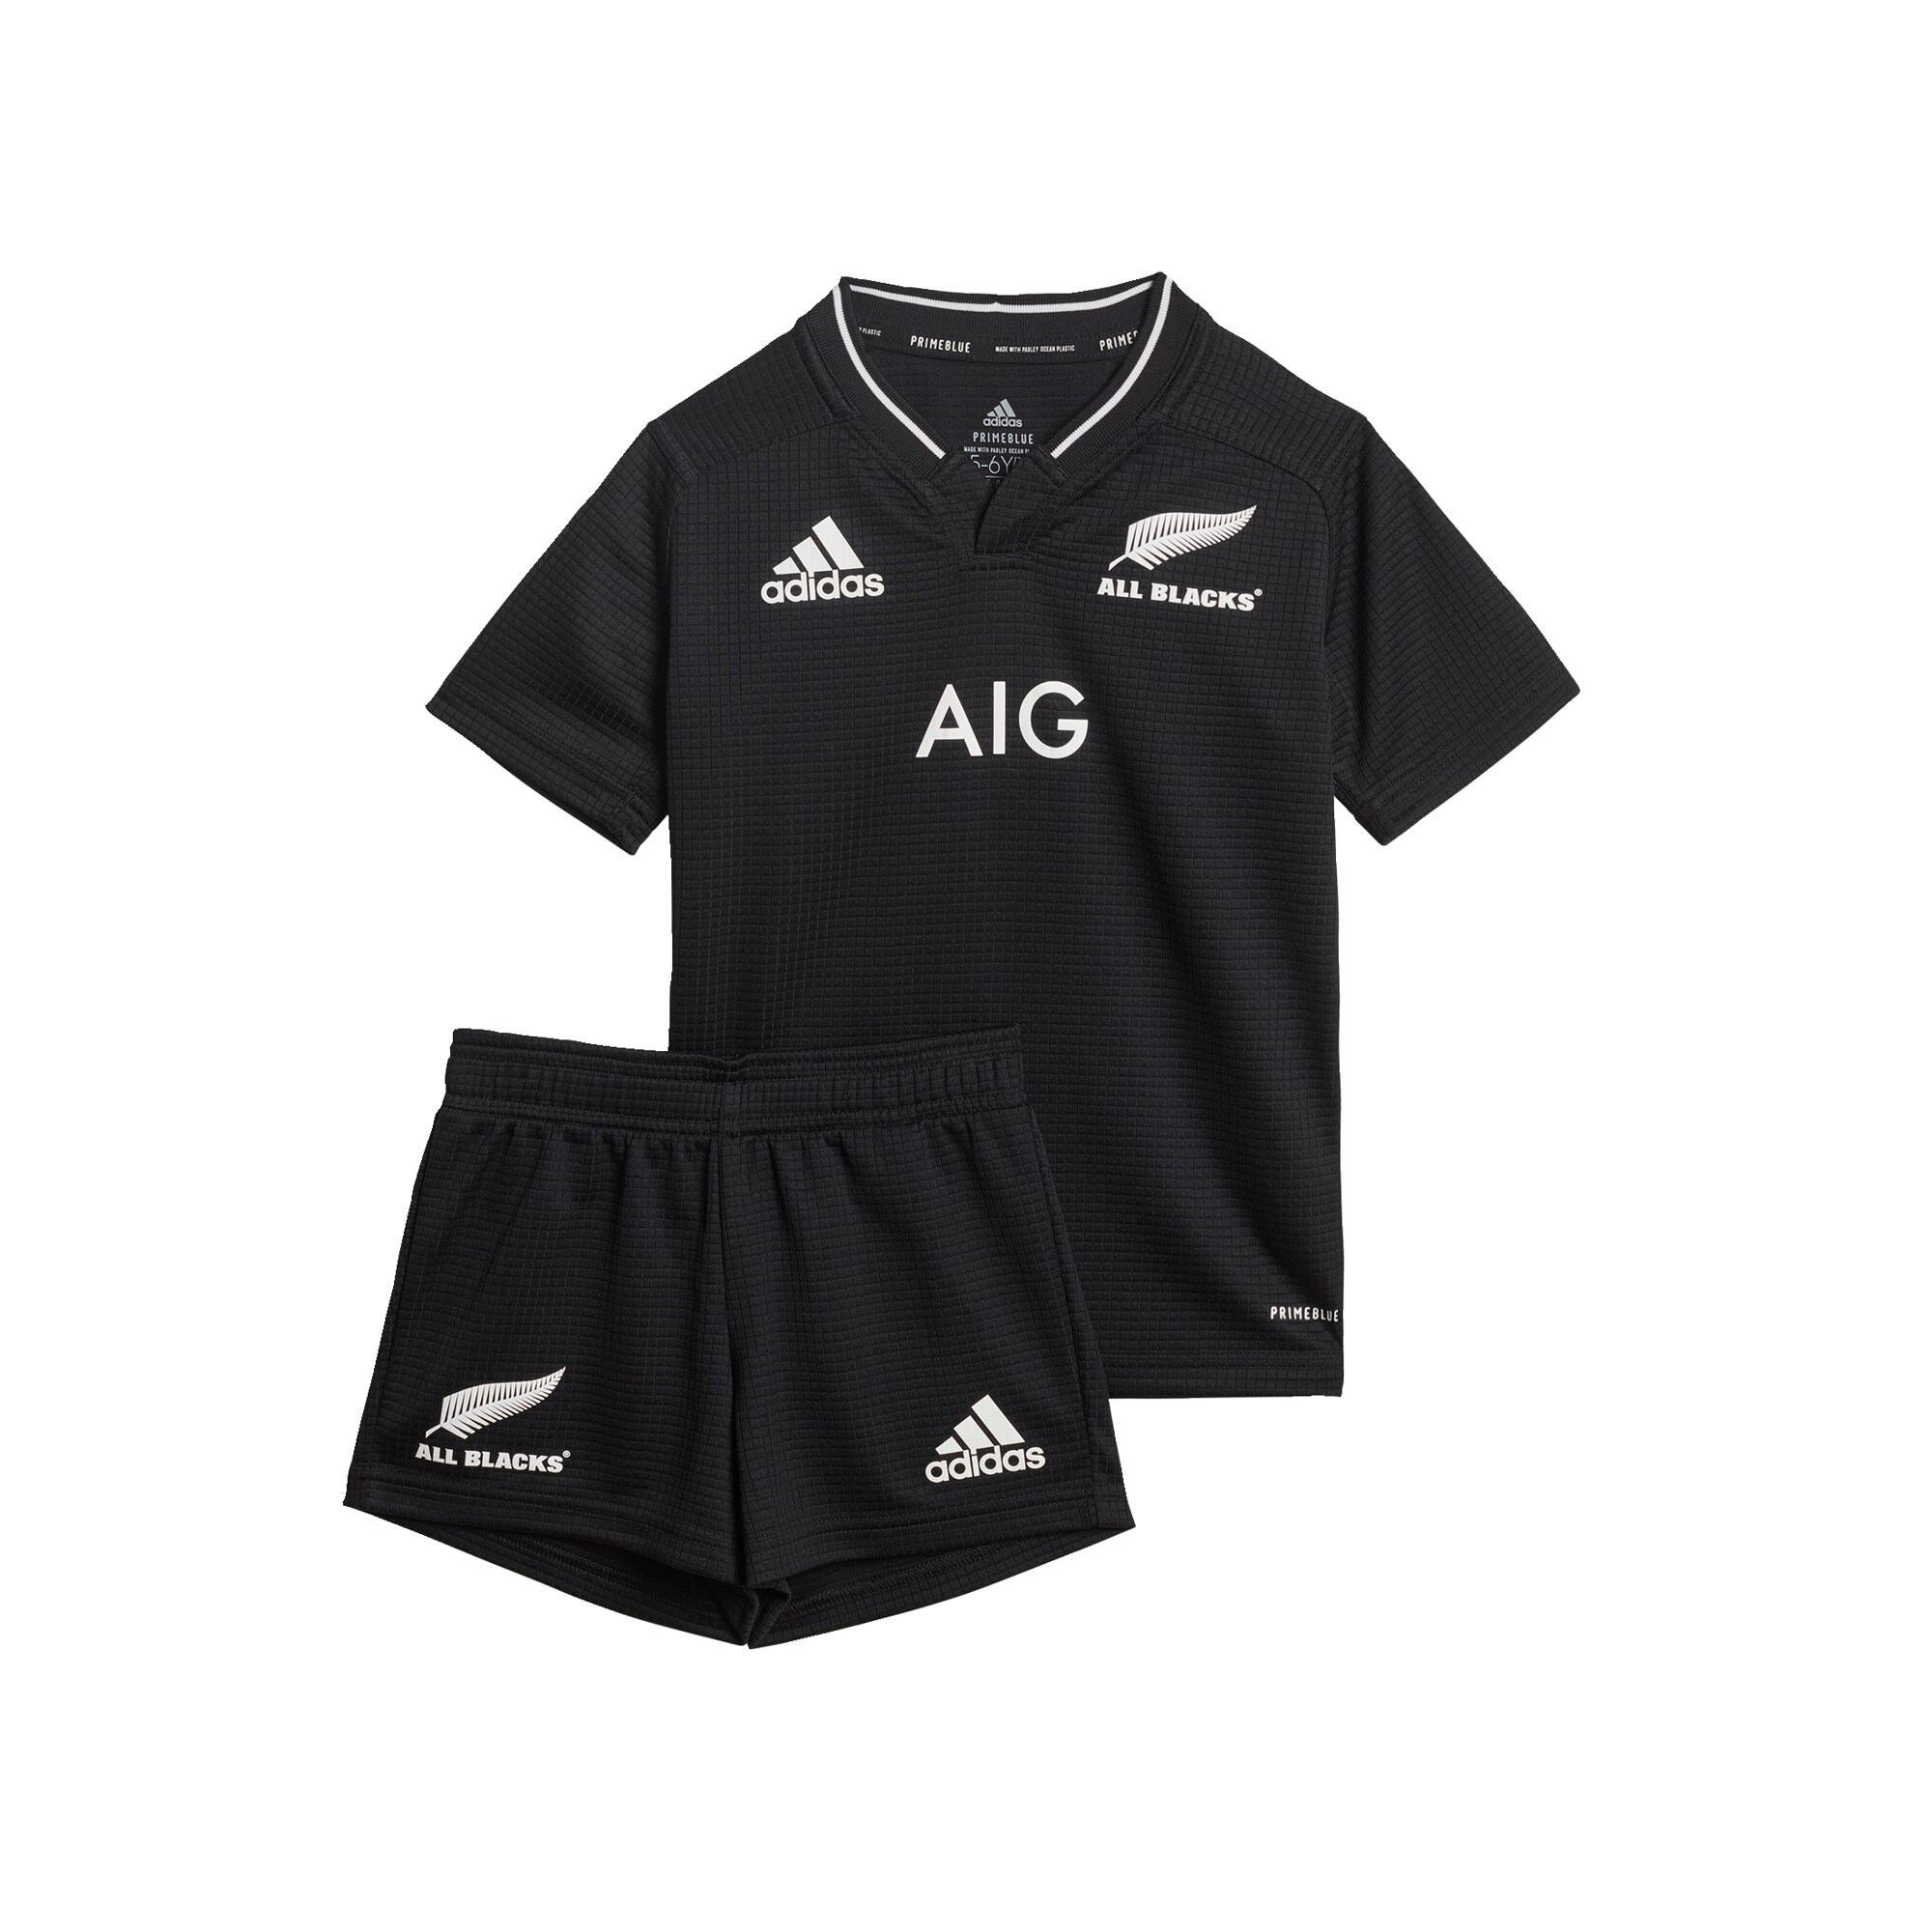 ADIDAS All Blacks Rugby Primeblue Replica Home Mini Kit